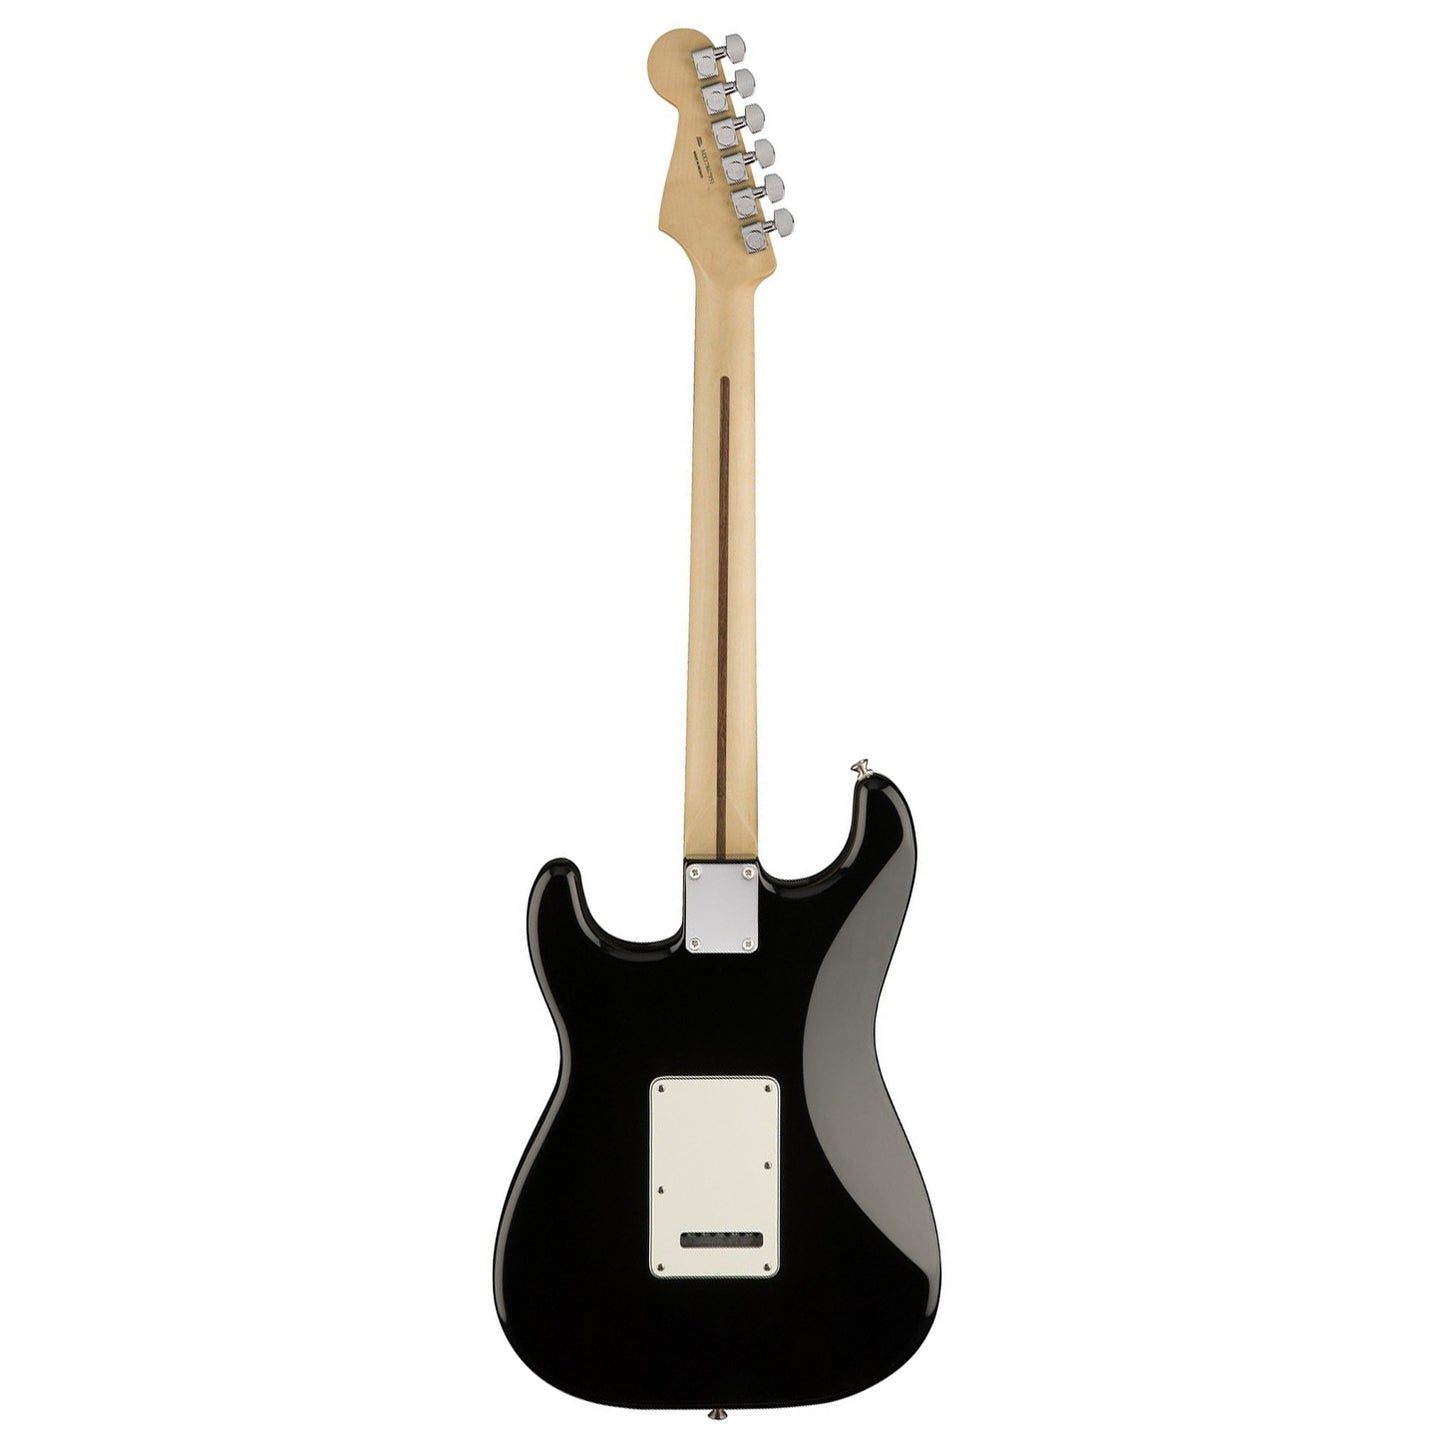 Fender Standard Stratocaster Electric Guitar in Black